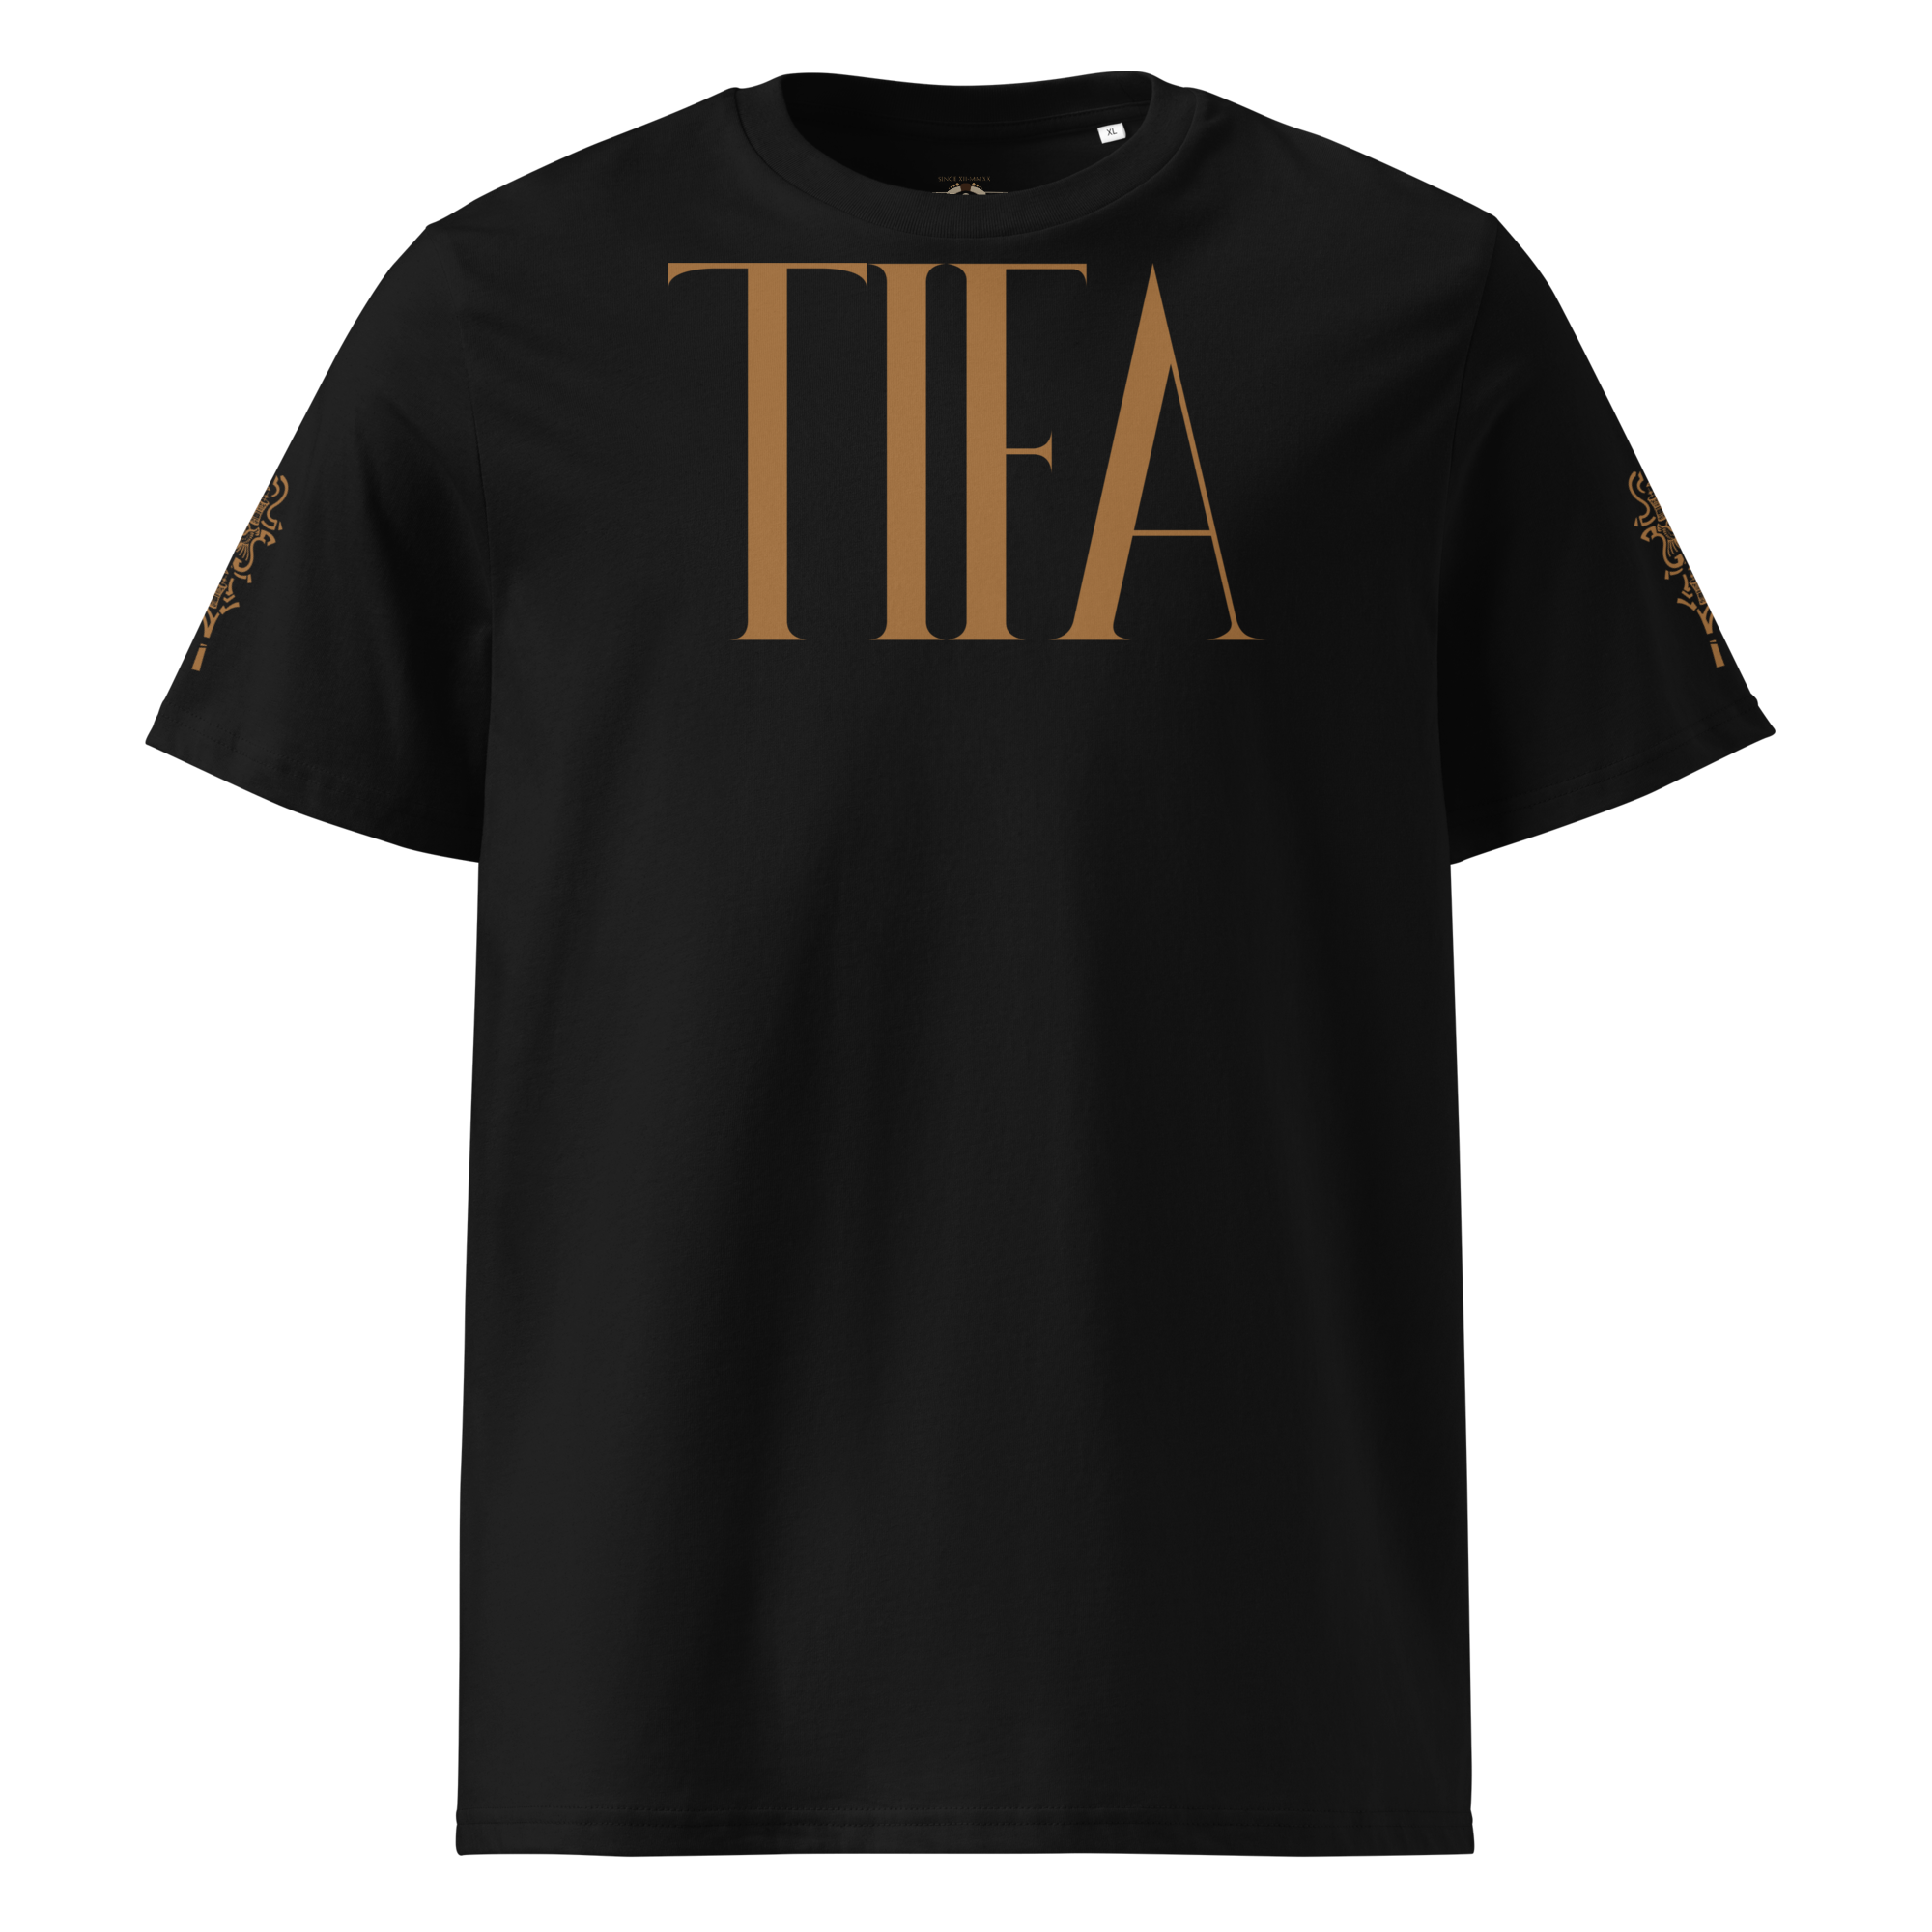 Tifa organic cotton t-shirt